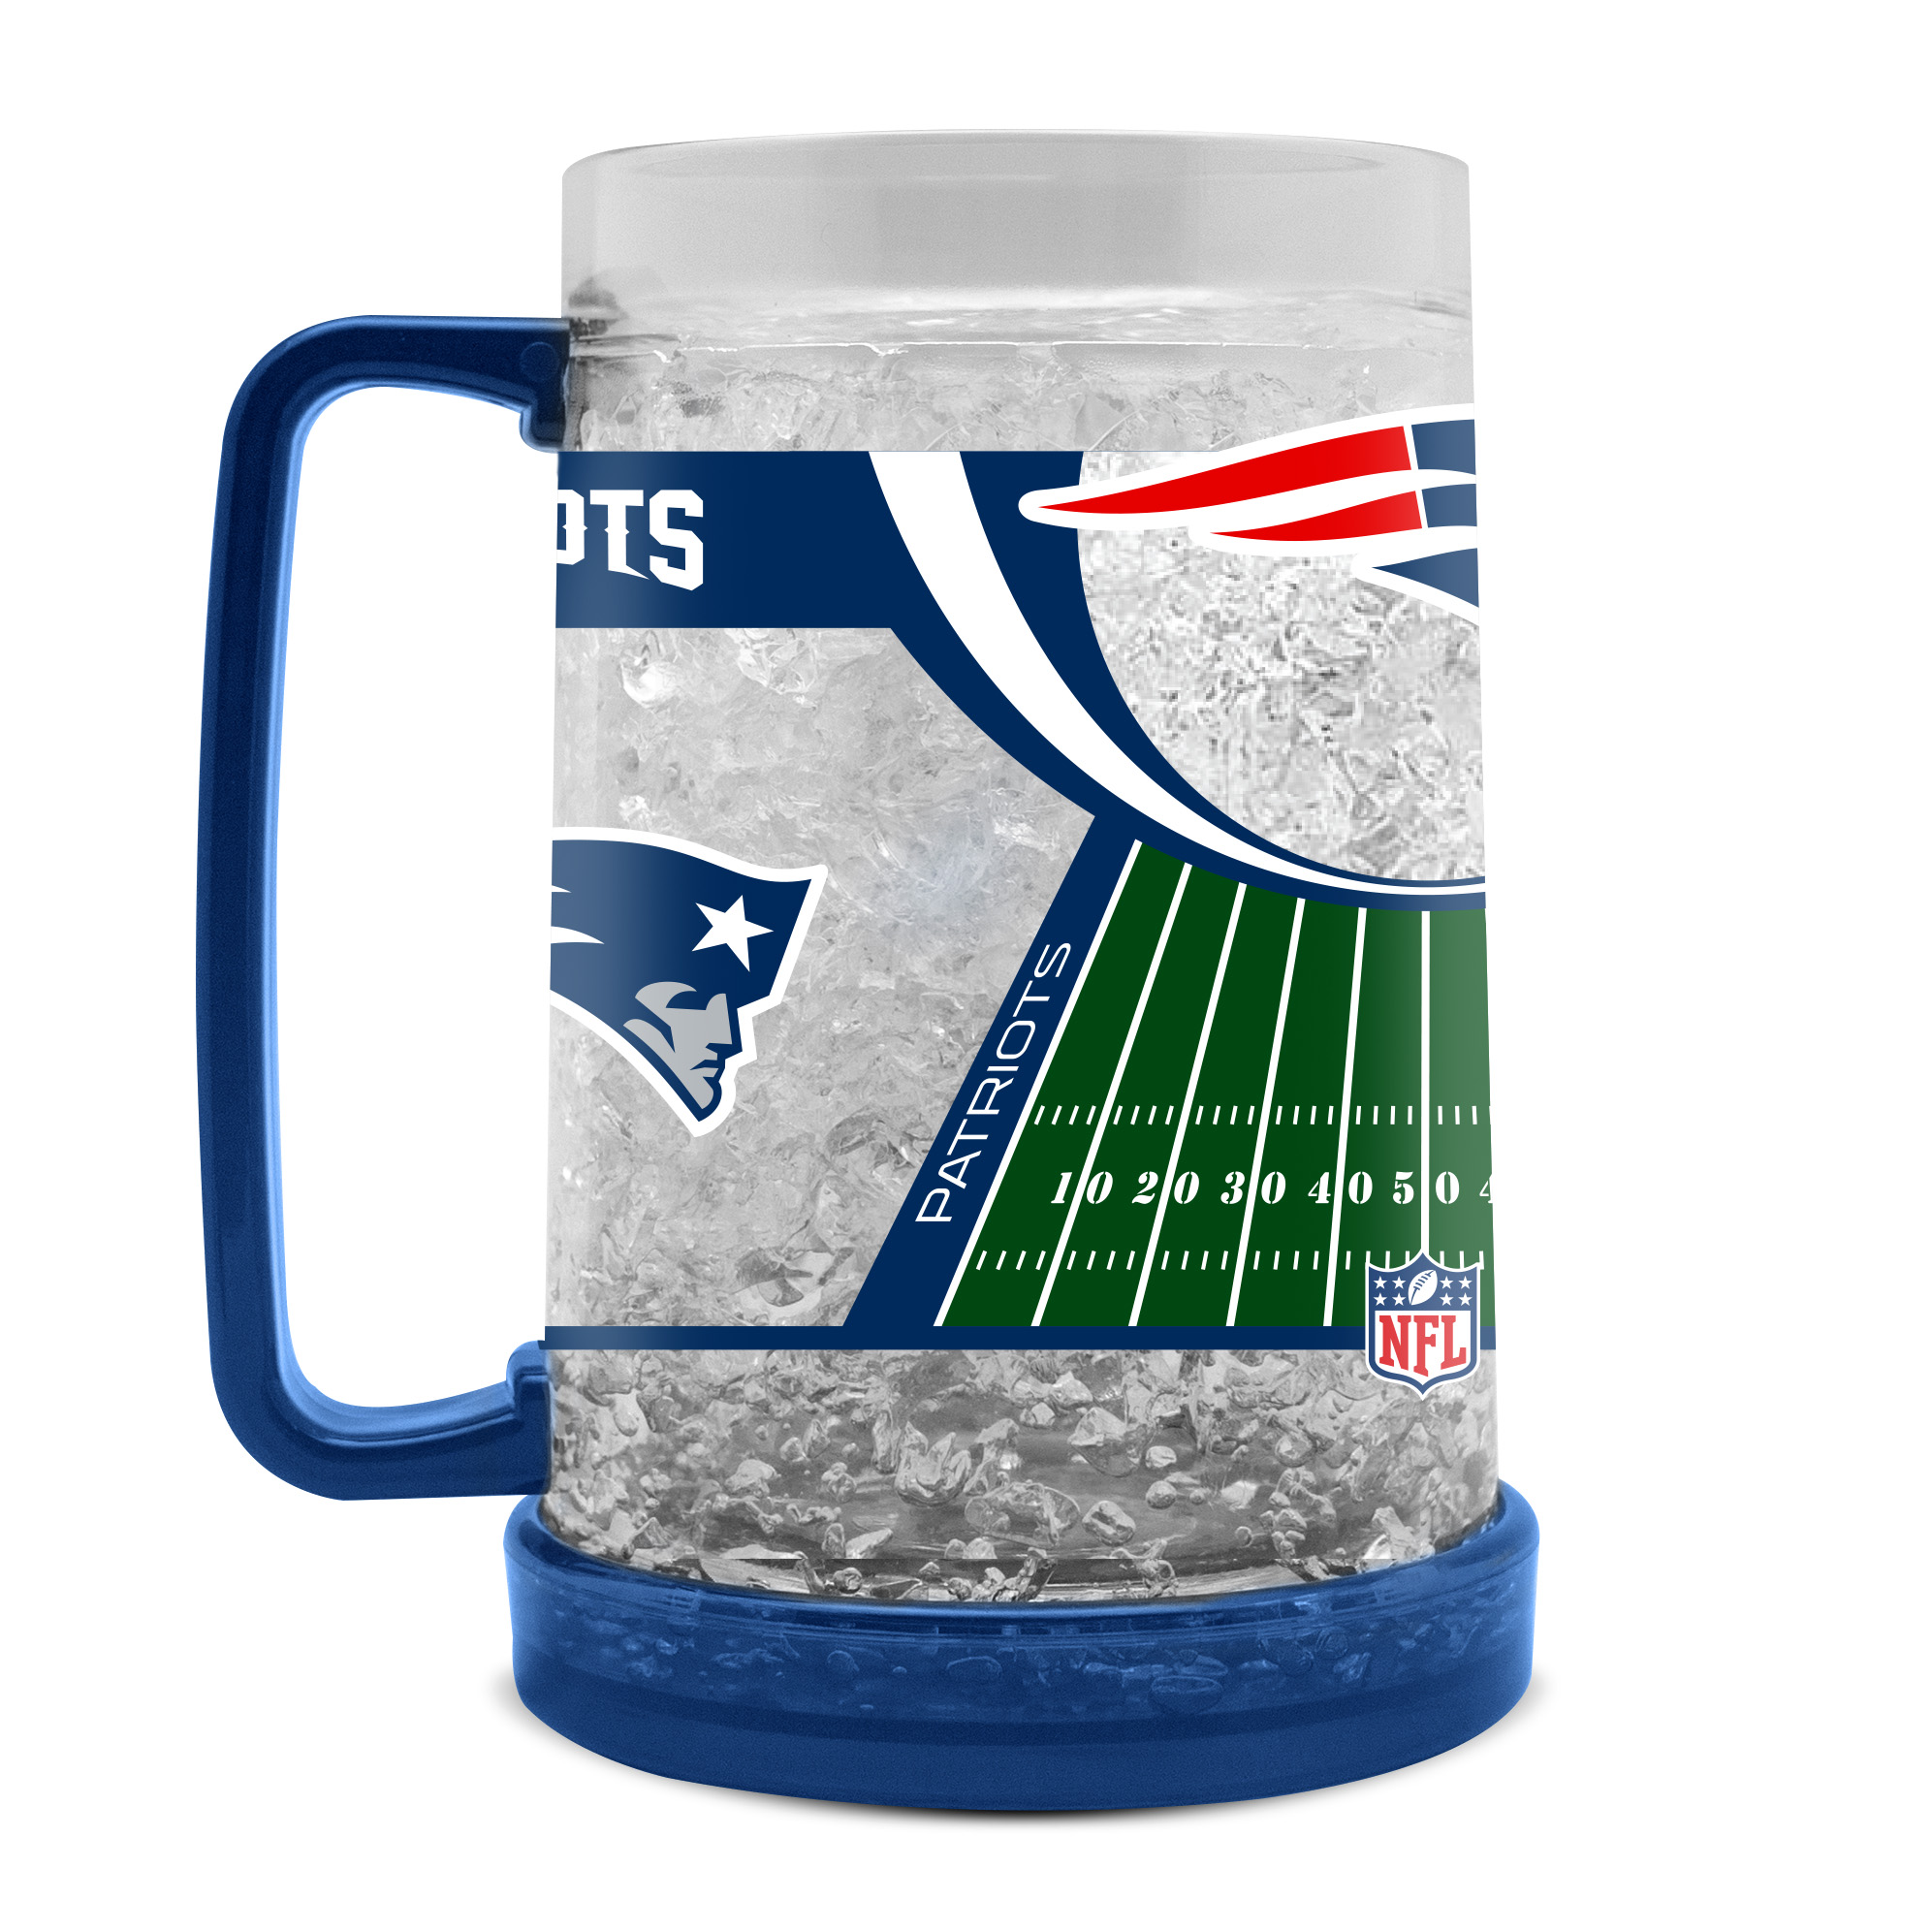 New England Patriots Football Crystal Freezer Bier Kühlglas 0,4 ltr 